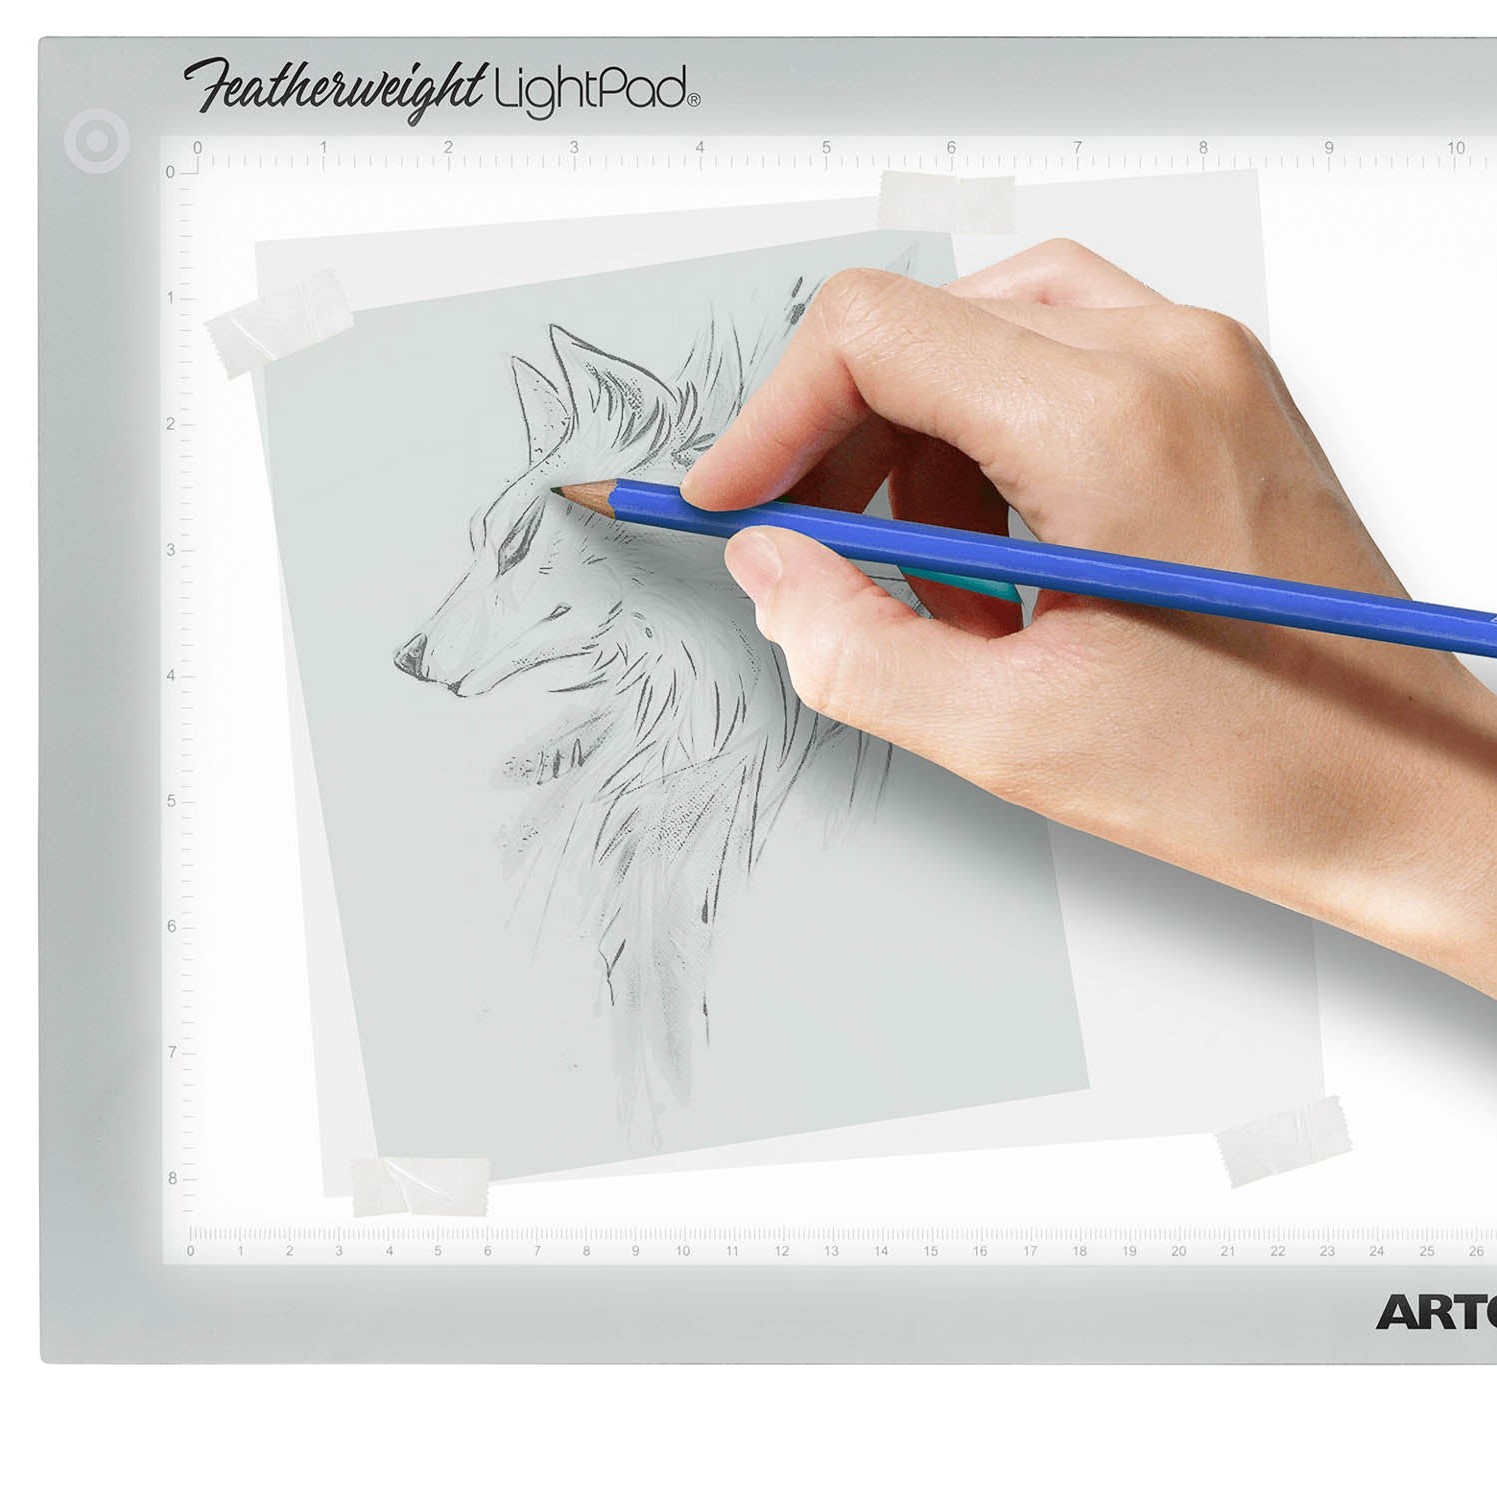 Studio Designs Artograph Featherweight LightPad